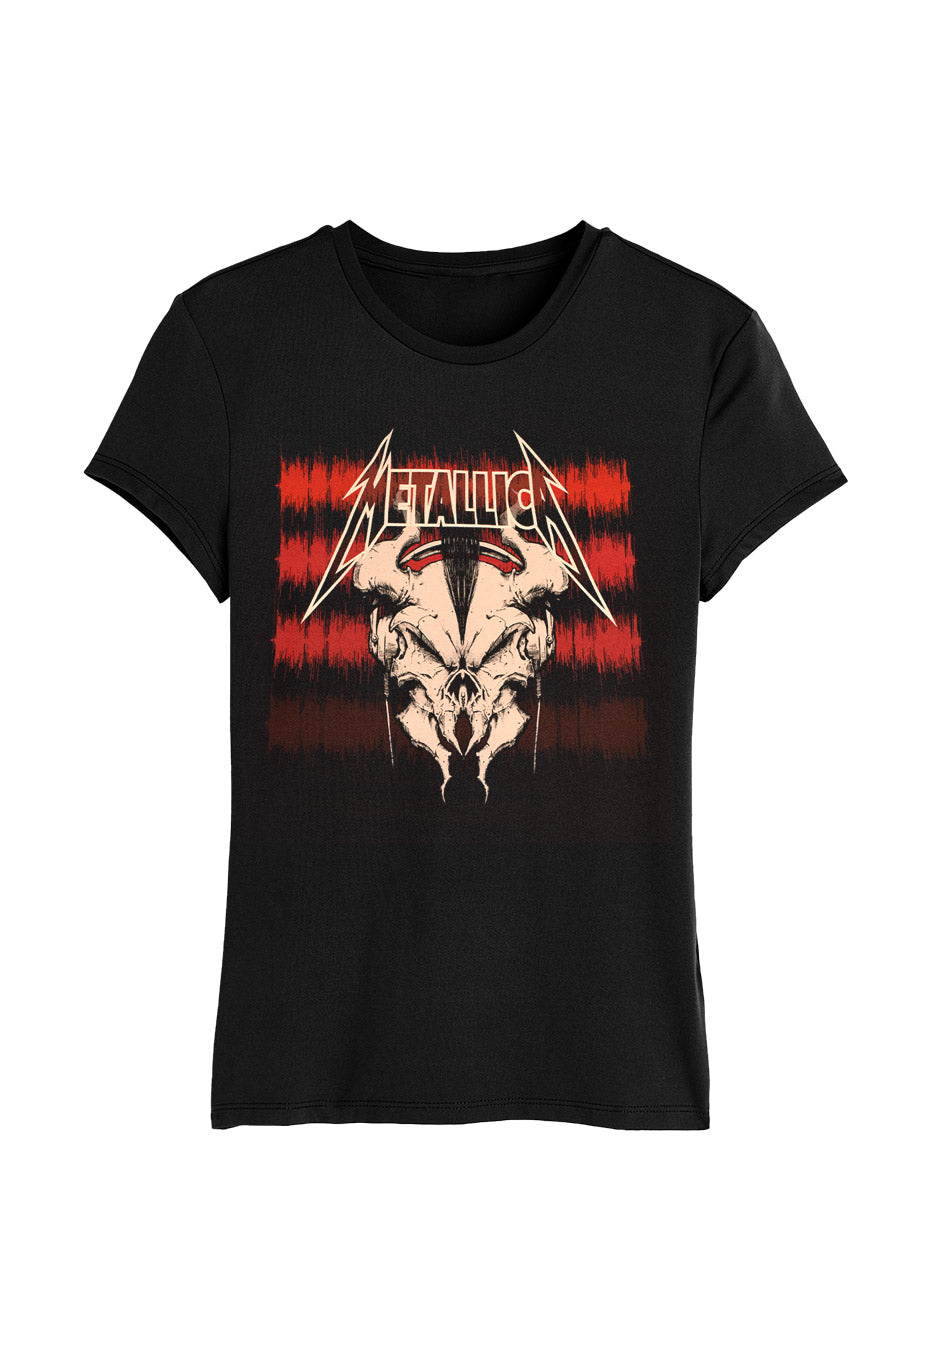 Metallica - Squindo White Skull - Girly